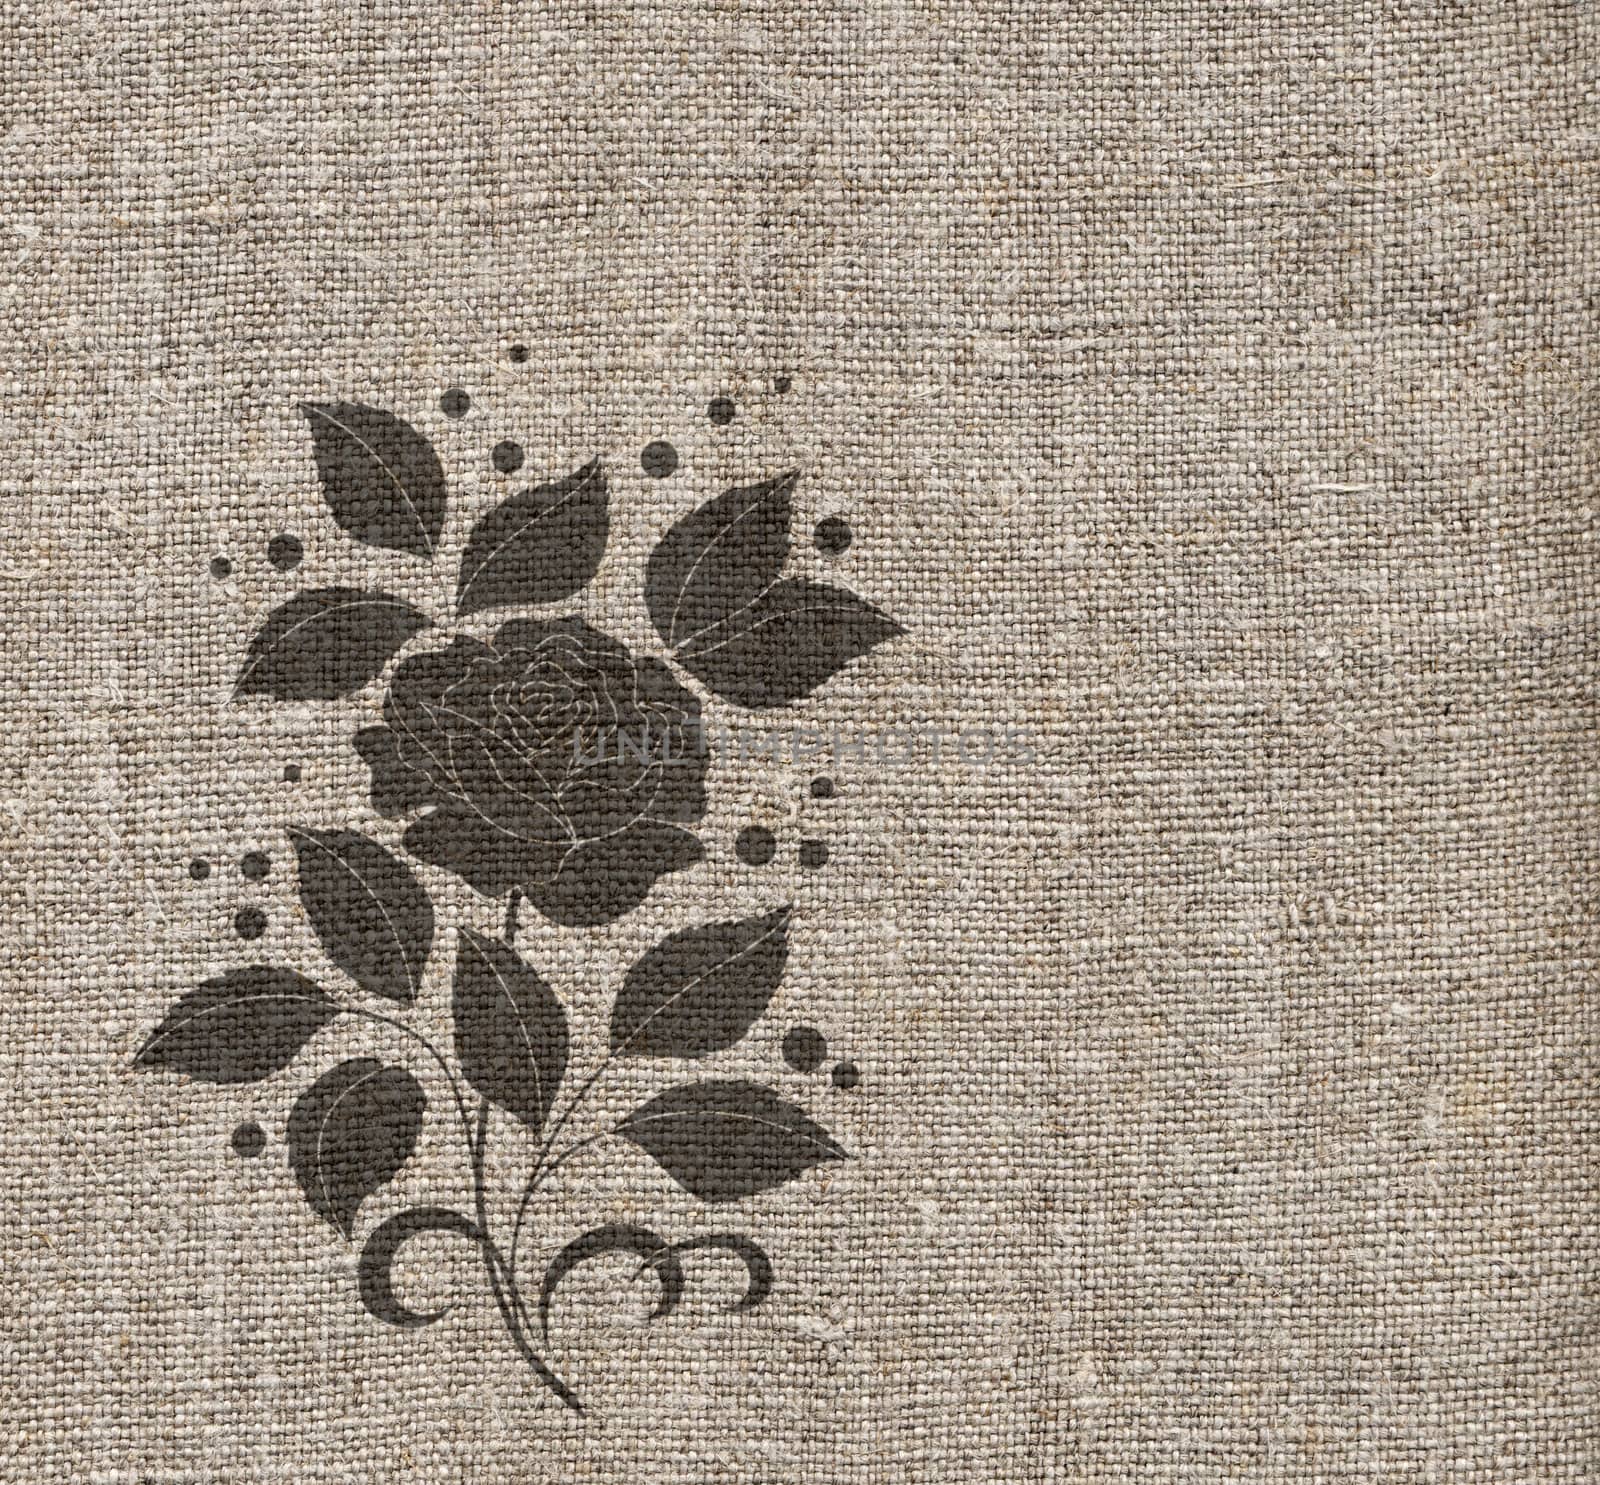 Artistic background, floral pattern, contour roses on a linen canvas